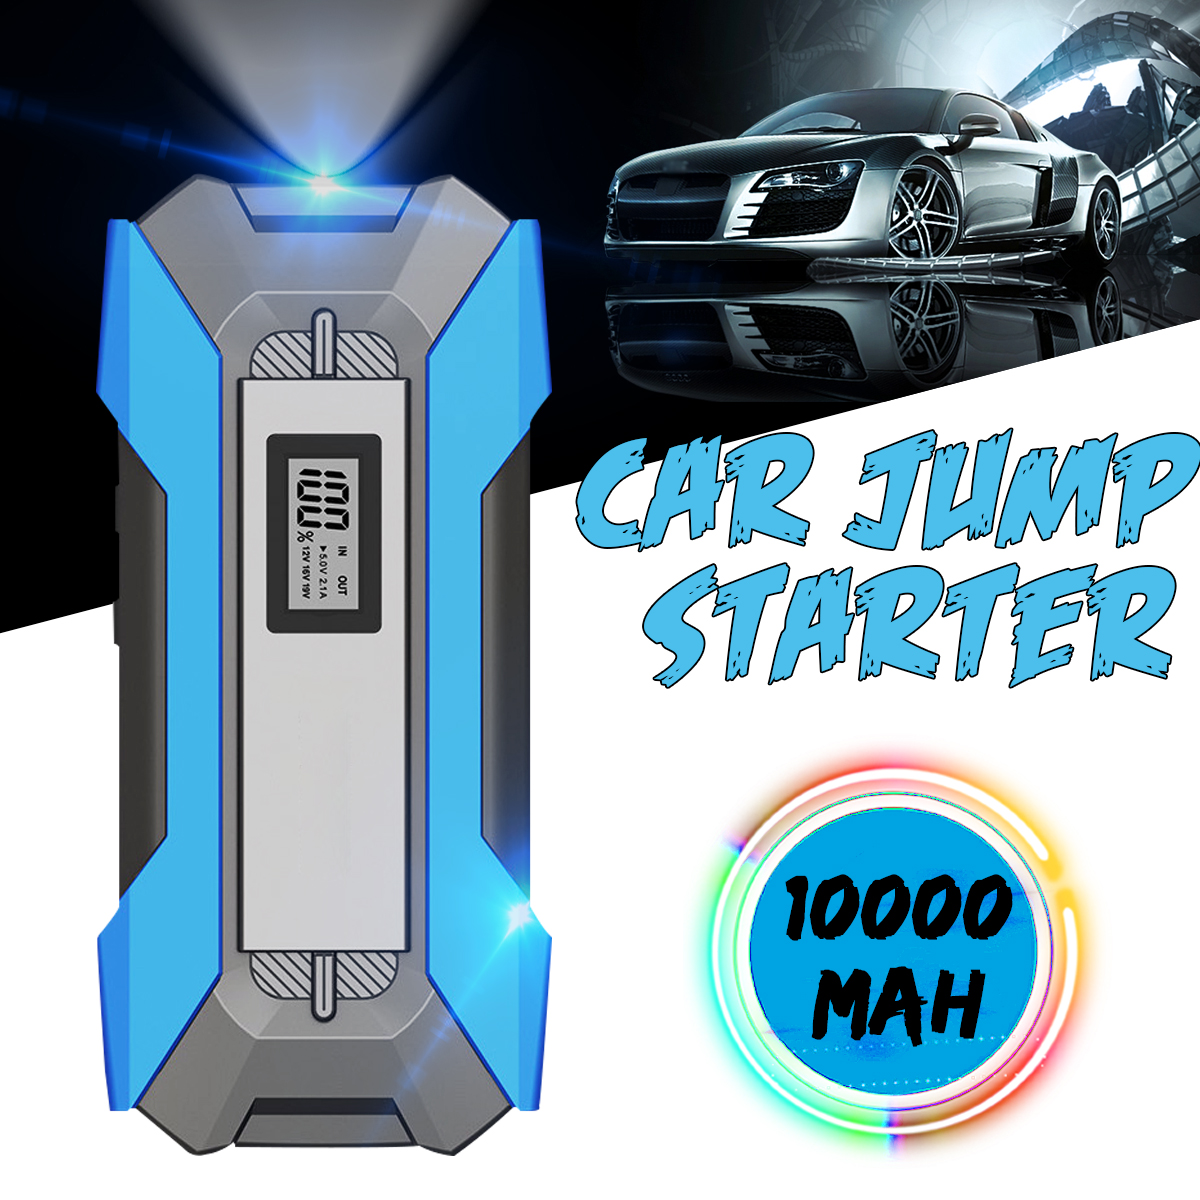 A11-Display-True-10000mah-Portable-Car-Jump-Starter-Emergency-Power-Bank-Emergency-Charger-Battery-1640834-1